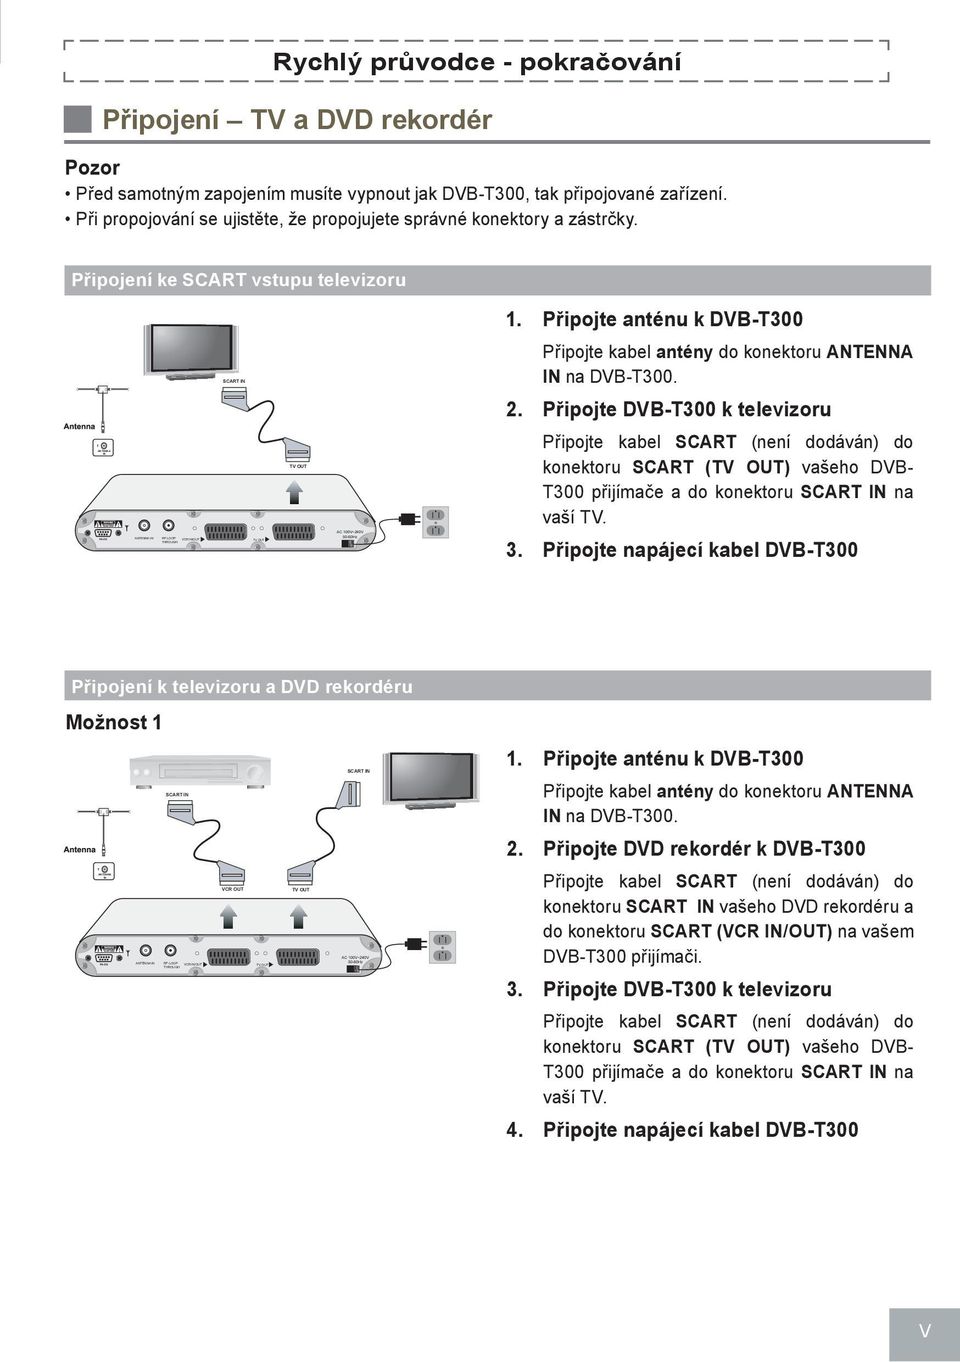 Připojte anténu k DVB-T300 SCART IN Připojte kabel antény do konektoru ANTENNA IN na DVB-T300. 2.